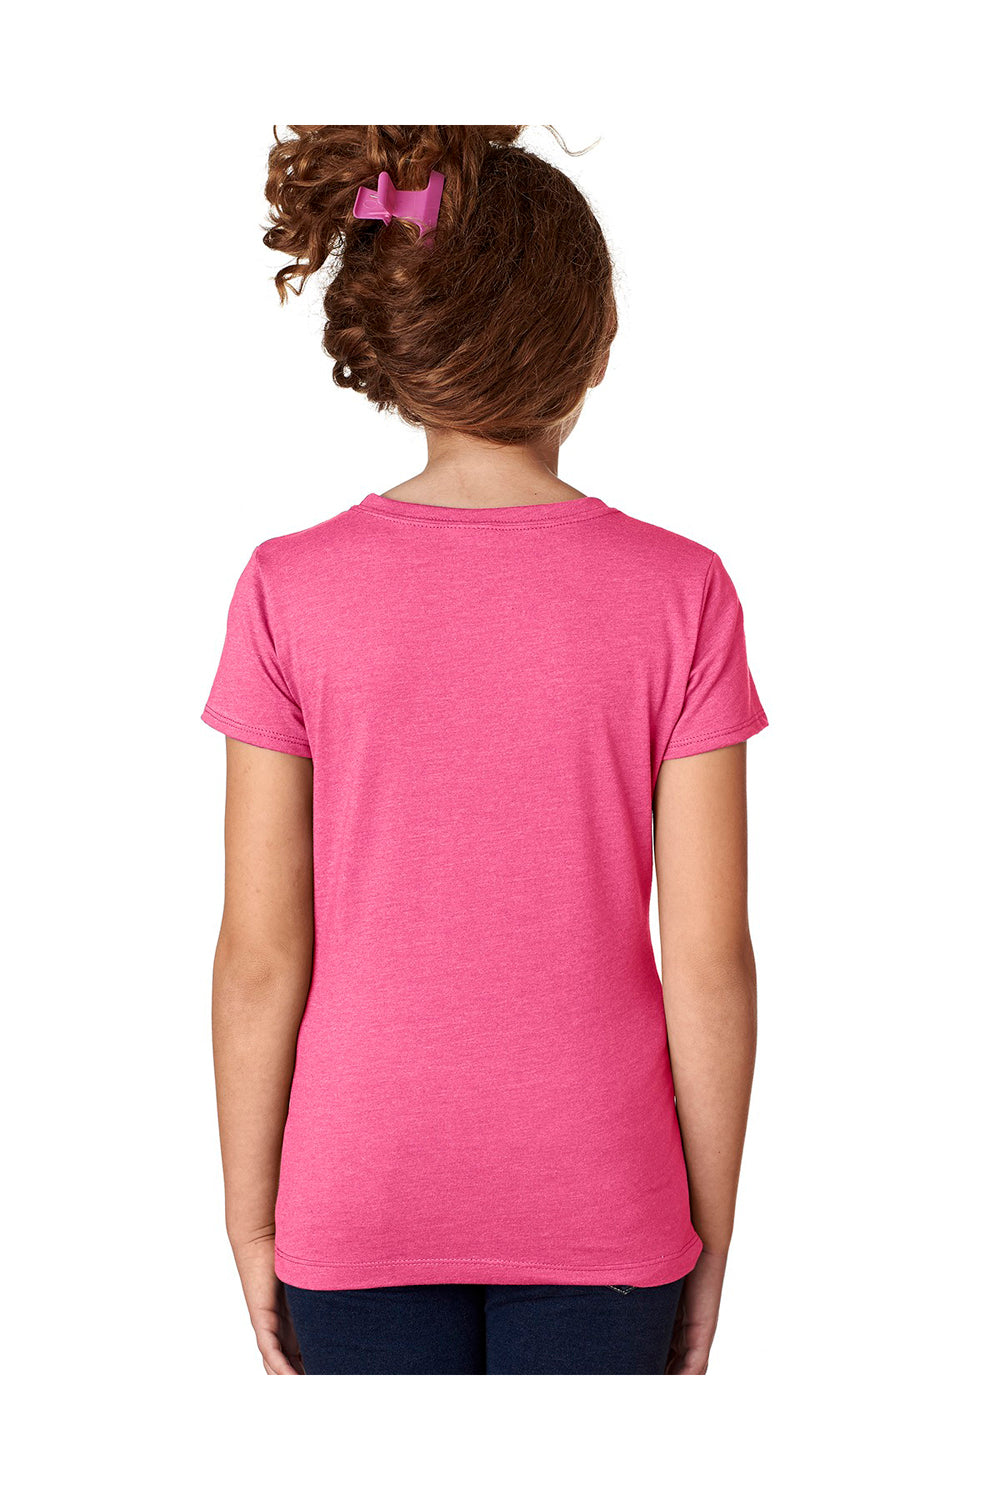 Next Level 3712 Youth Princess CVC Jersey Short Sleeve Crewneck T-Shirt Raspberry Pink Back